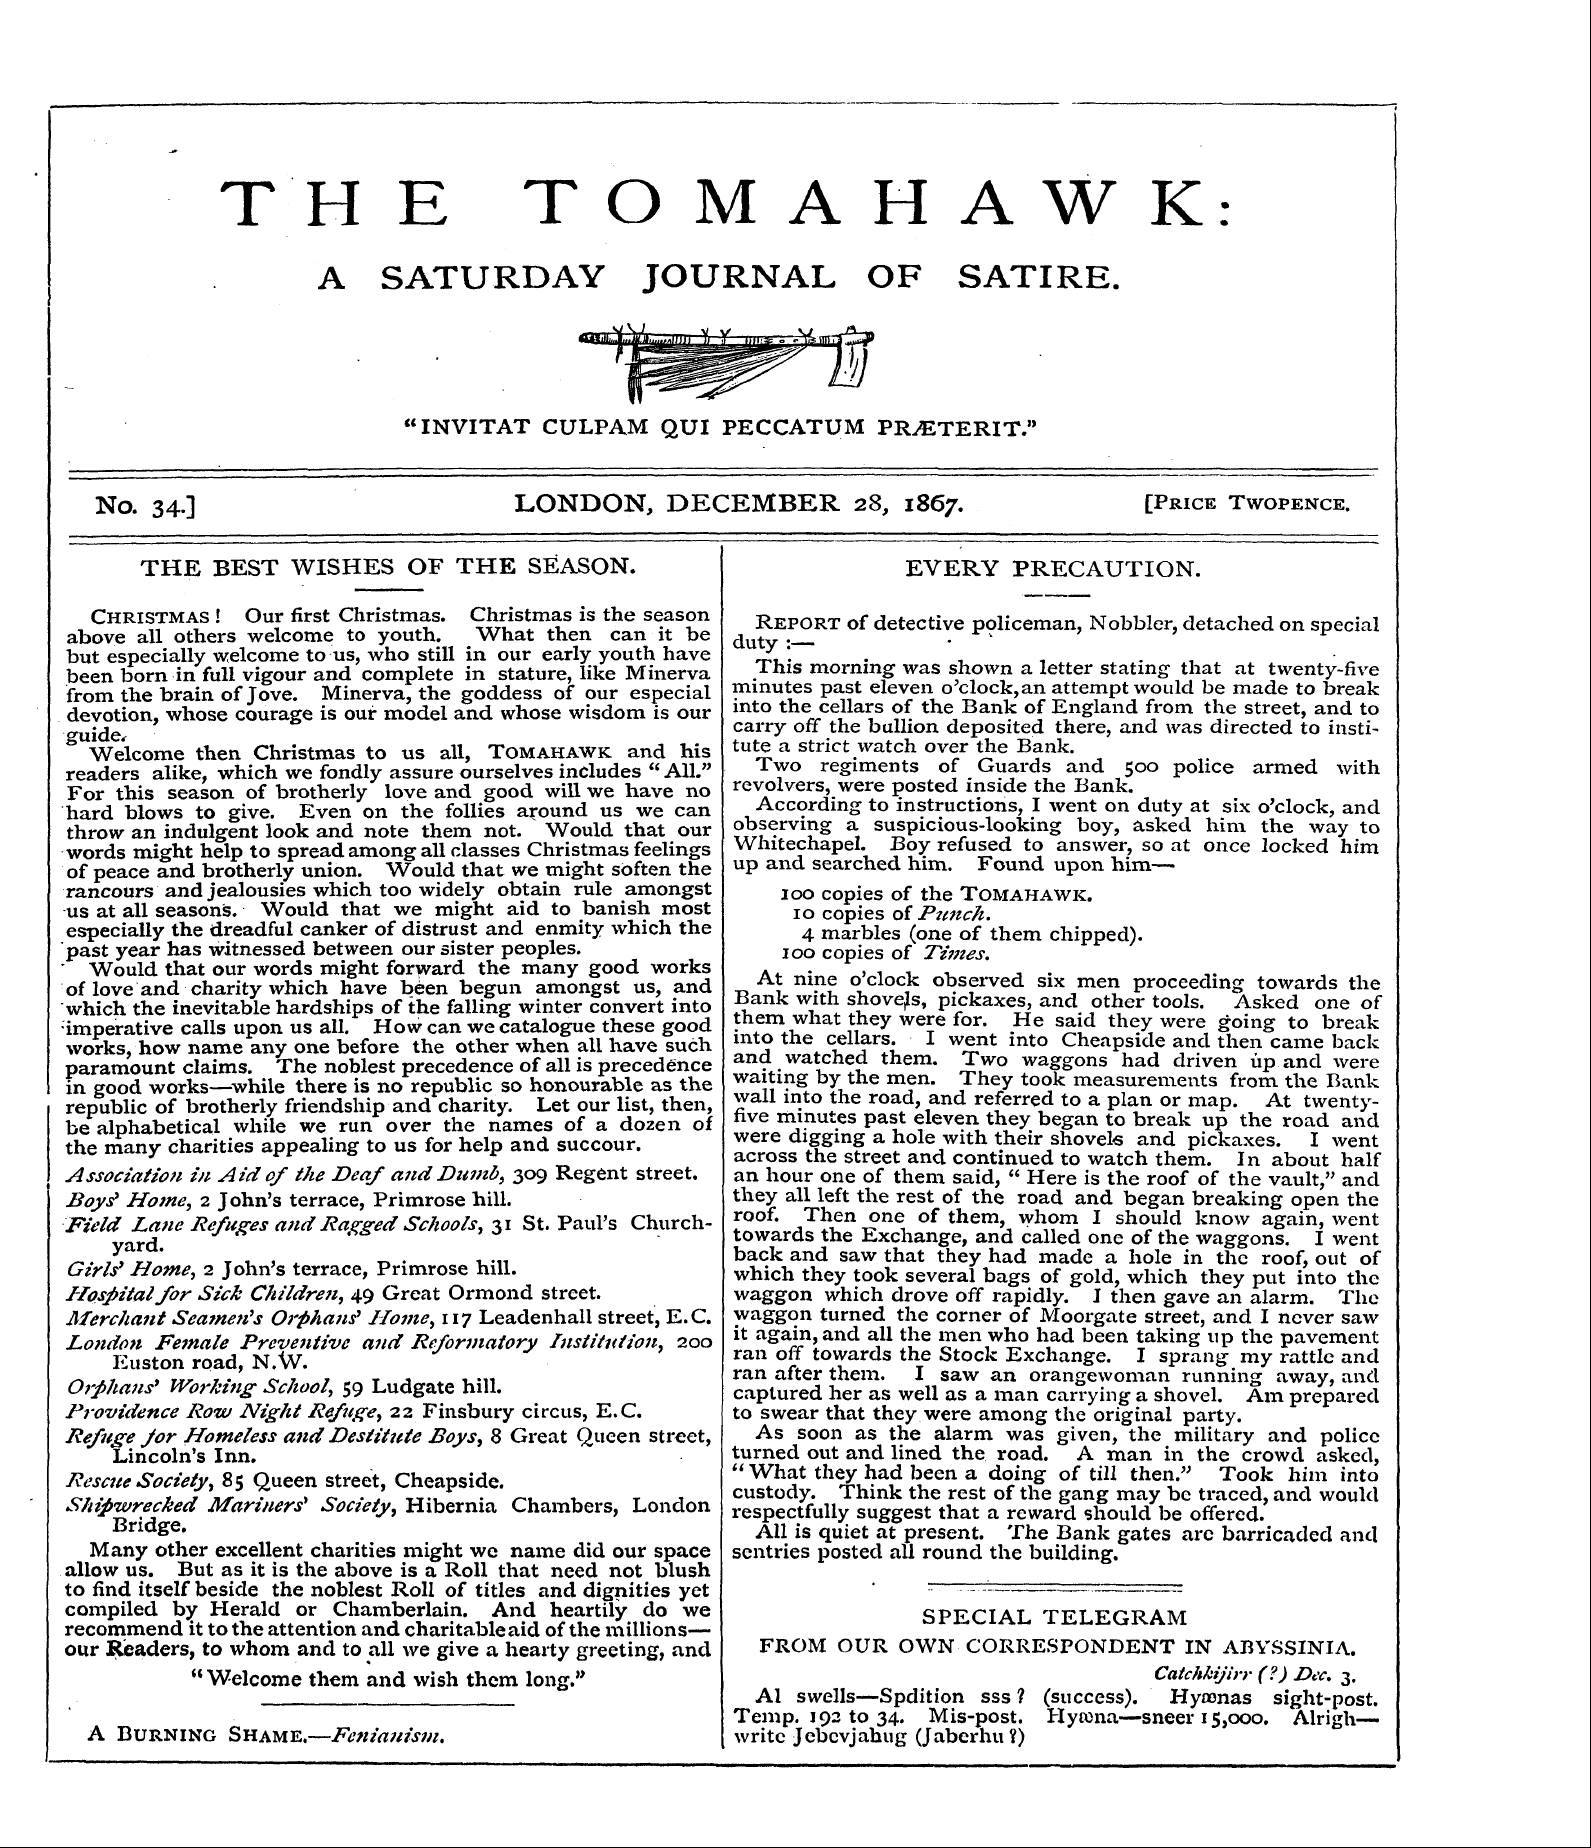 Tomahawk (1867-1870): jS F Y, 1st edition - Every Precaution.